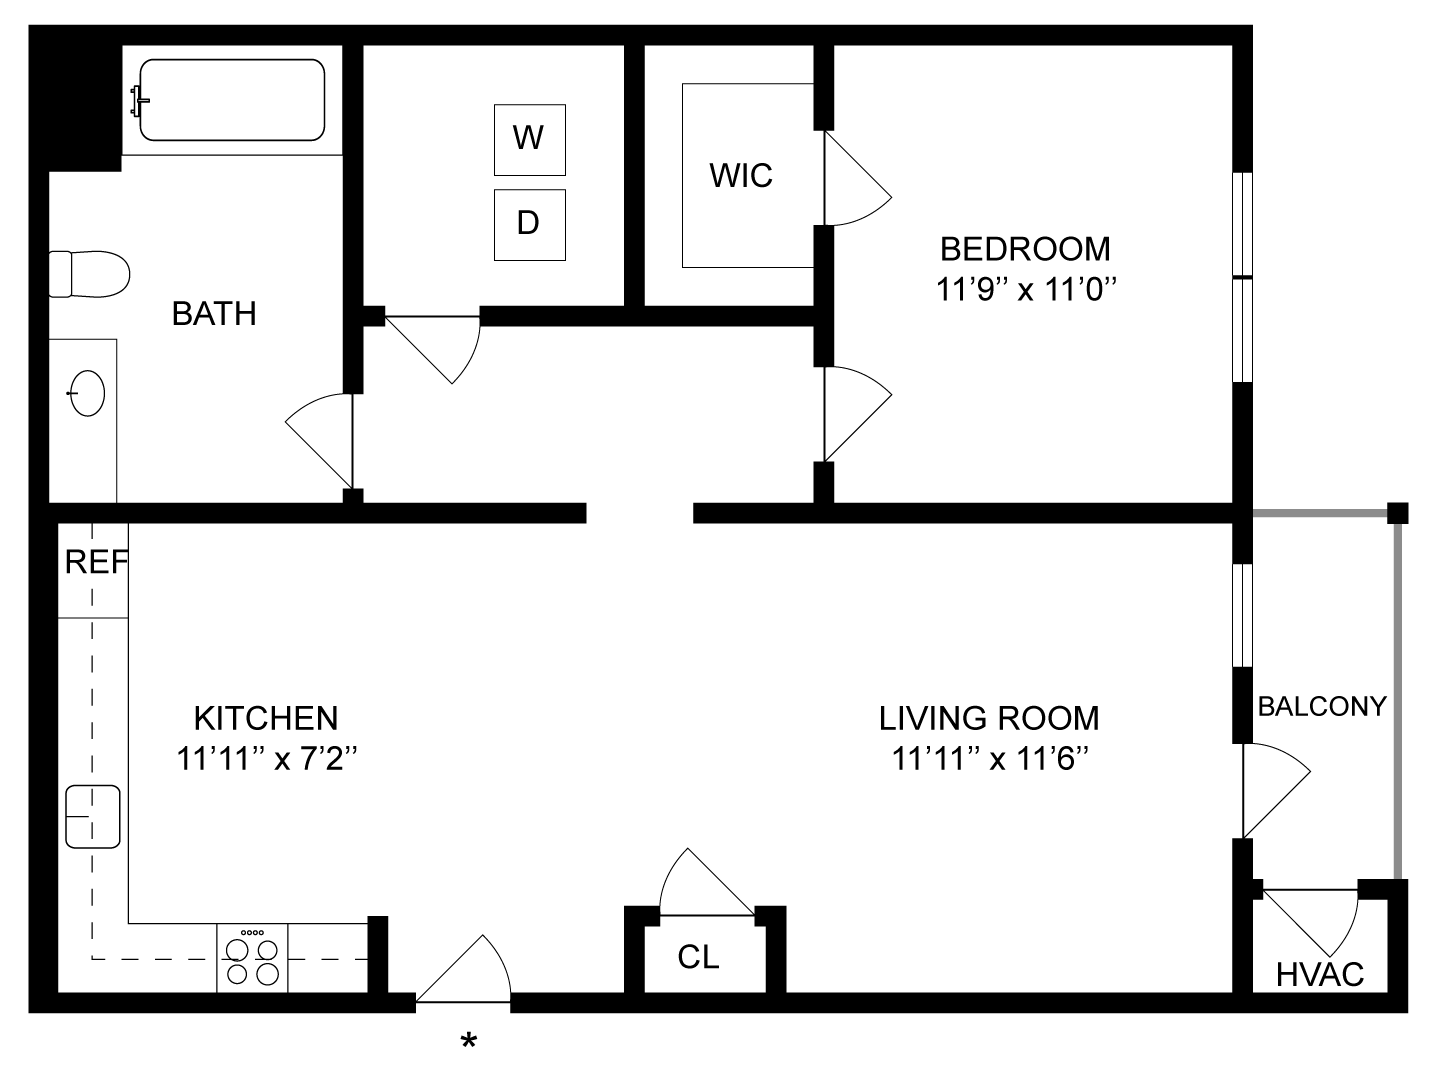 Floorplan for Apartment #01-B32, 1 bedroom unit at Halstead Hopkinton